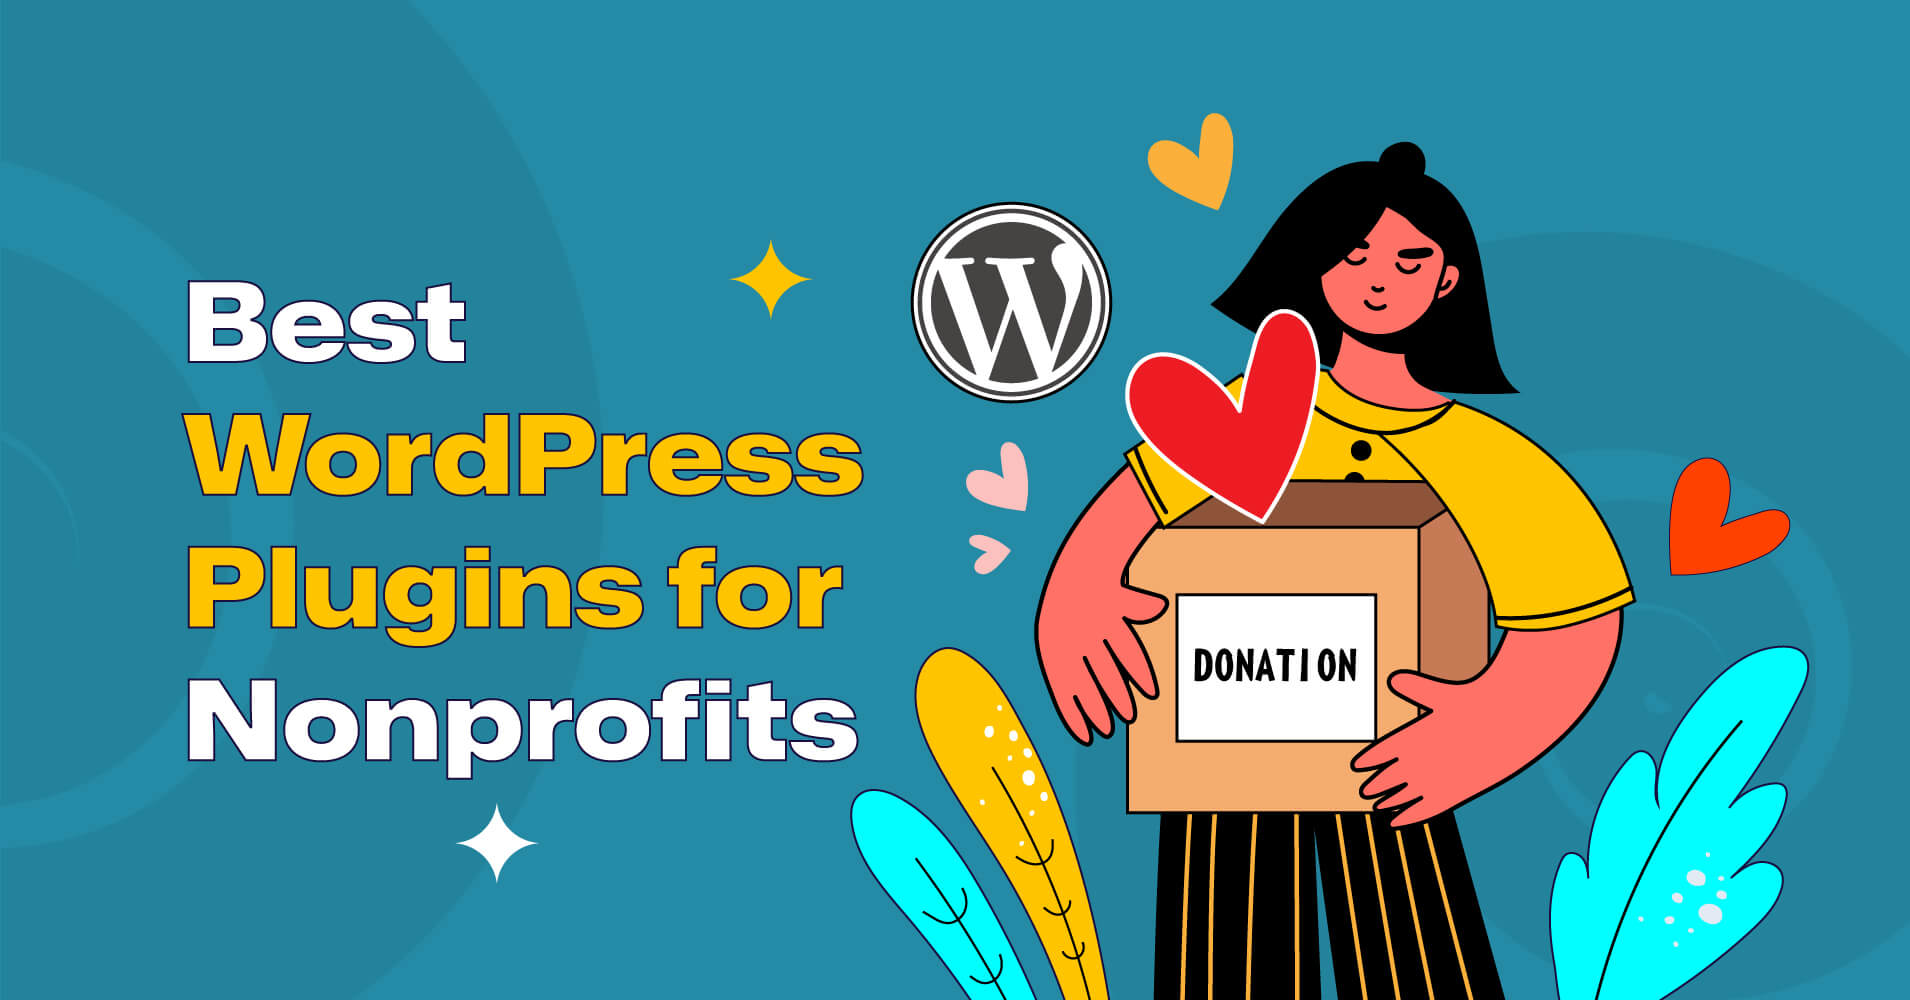 WordPress Plugins for Nonprofits